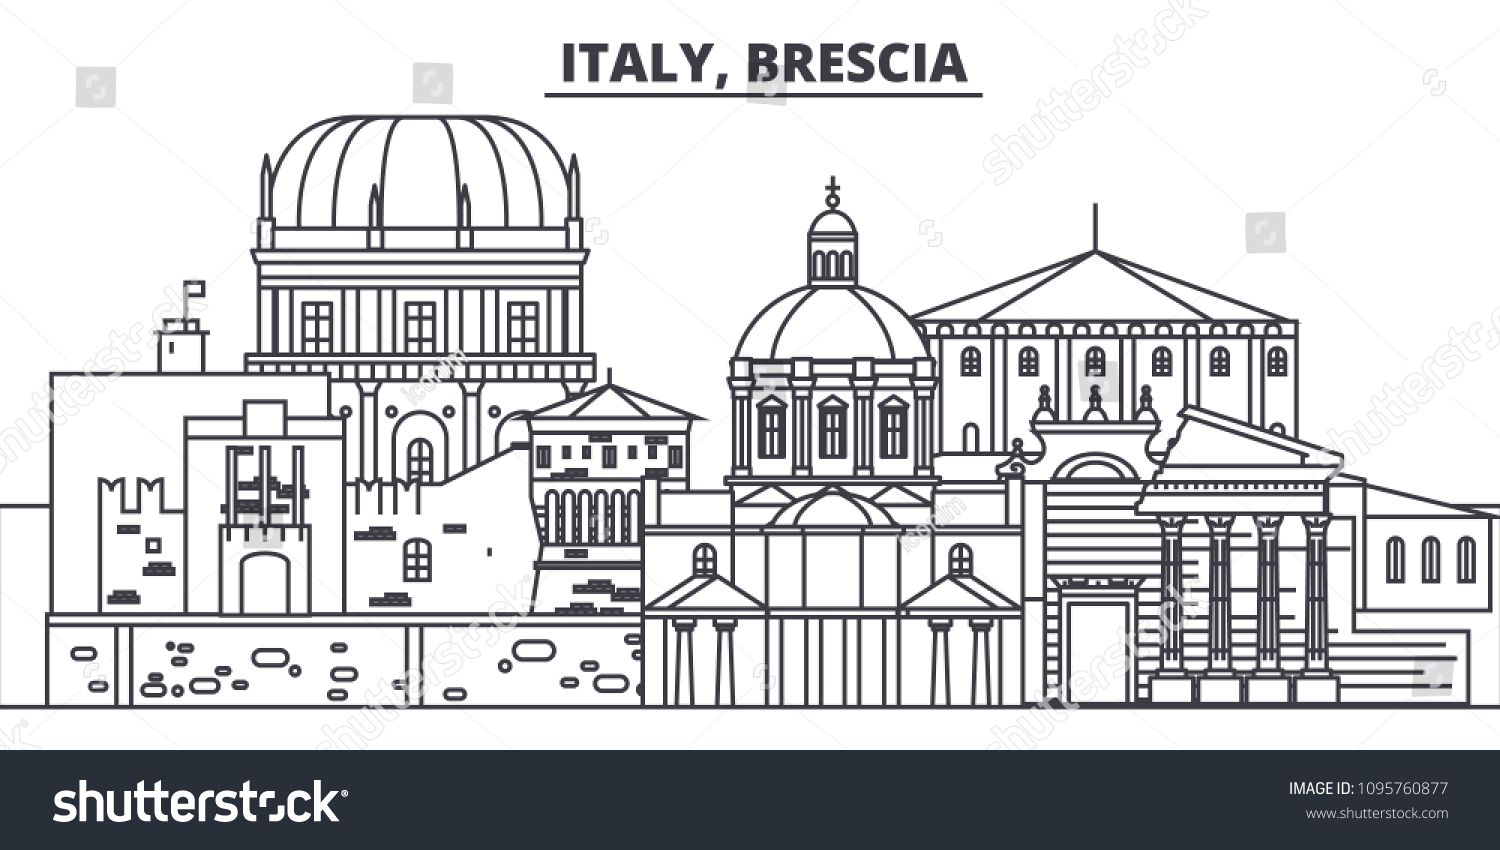 SVG of Italy, Brescia line skyline vector illustration. Italy, Brescia linear cityscape with famous landmarks, city sights, vector landscape.  svg